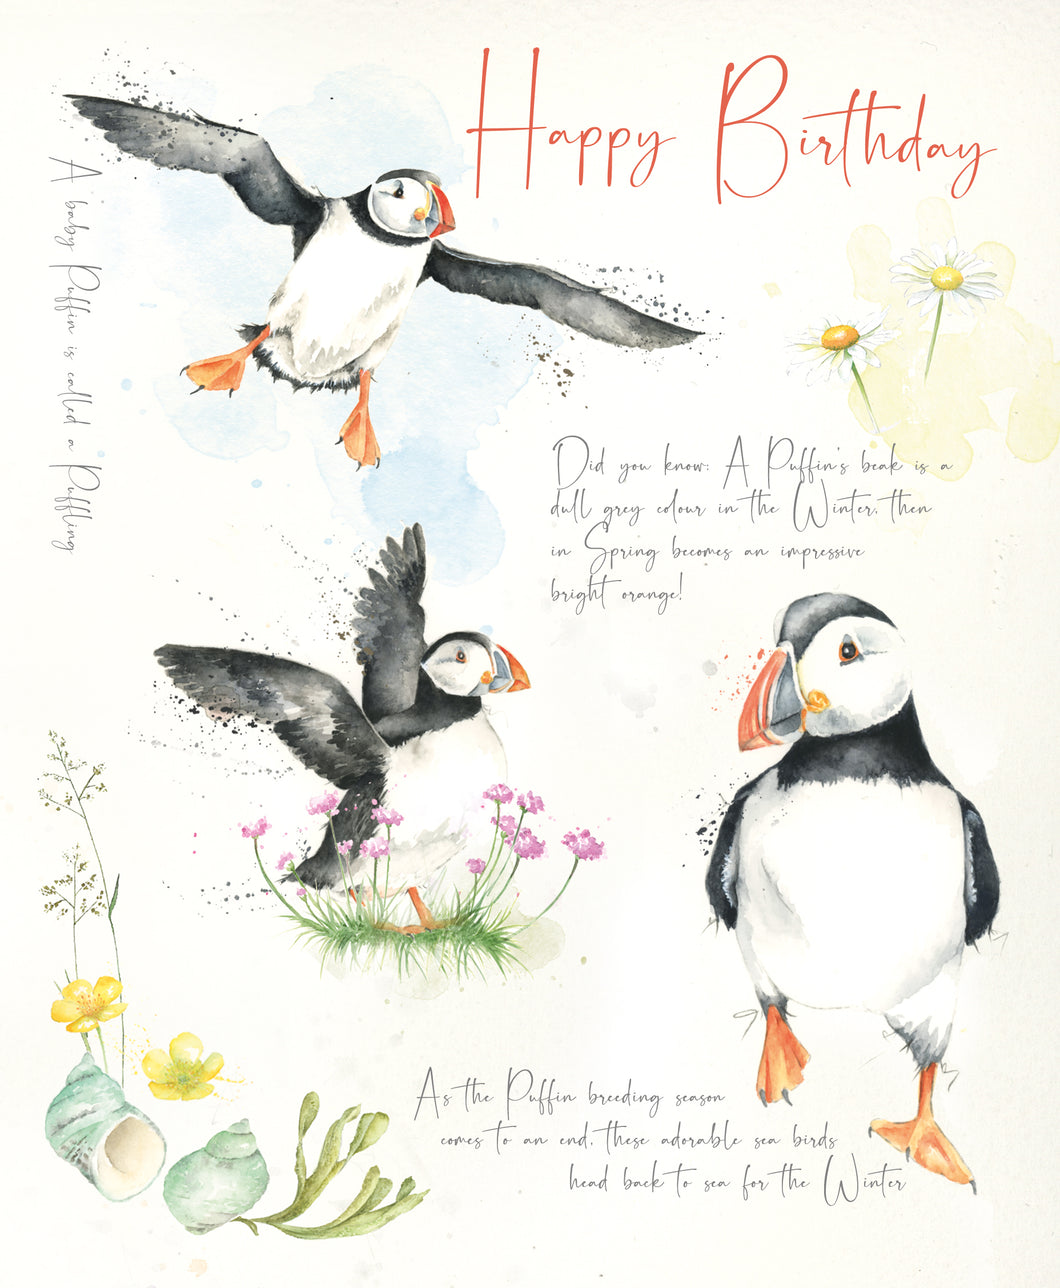 Happy Birthday Card - Puffins